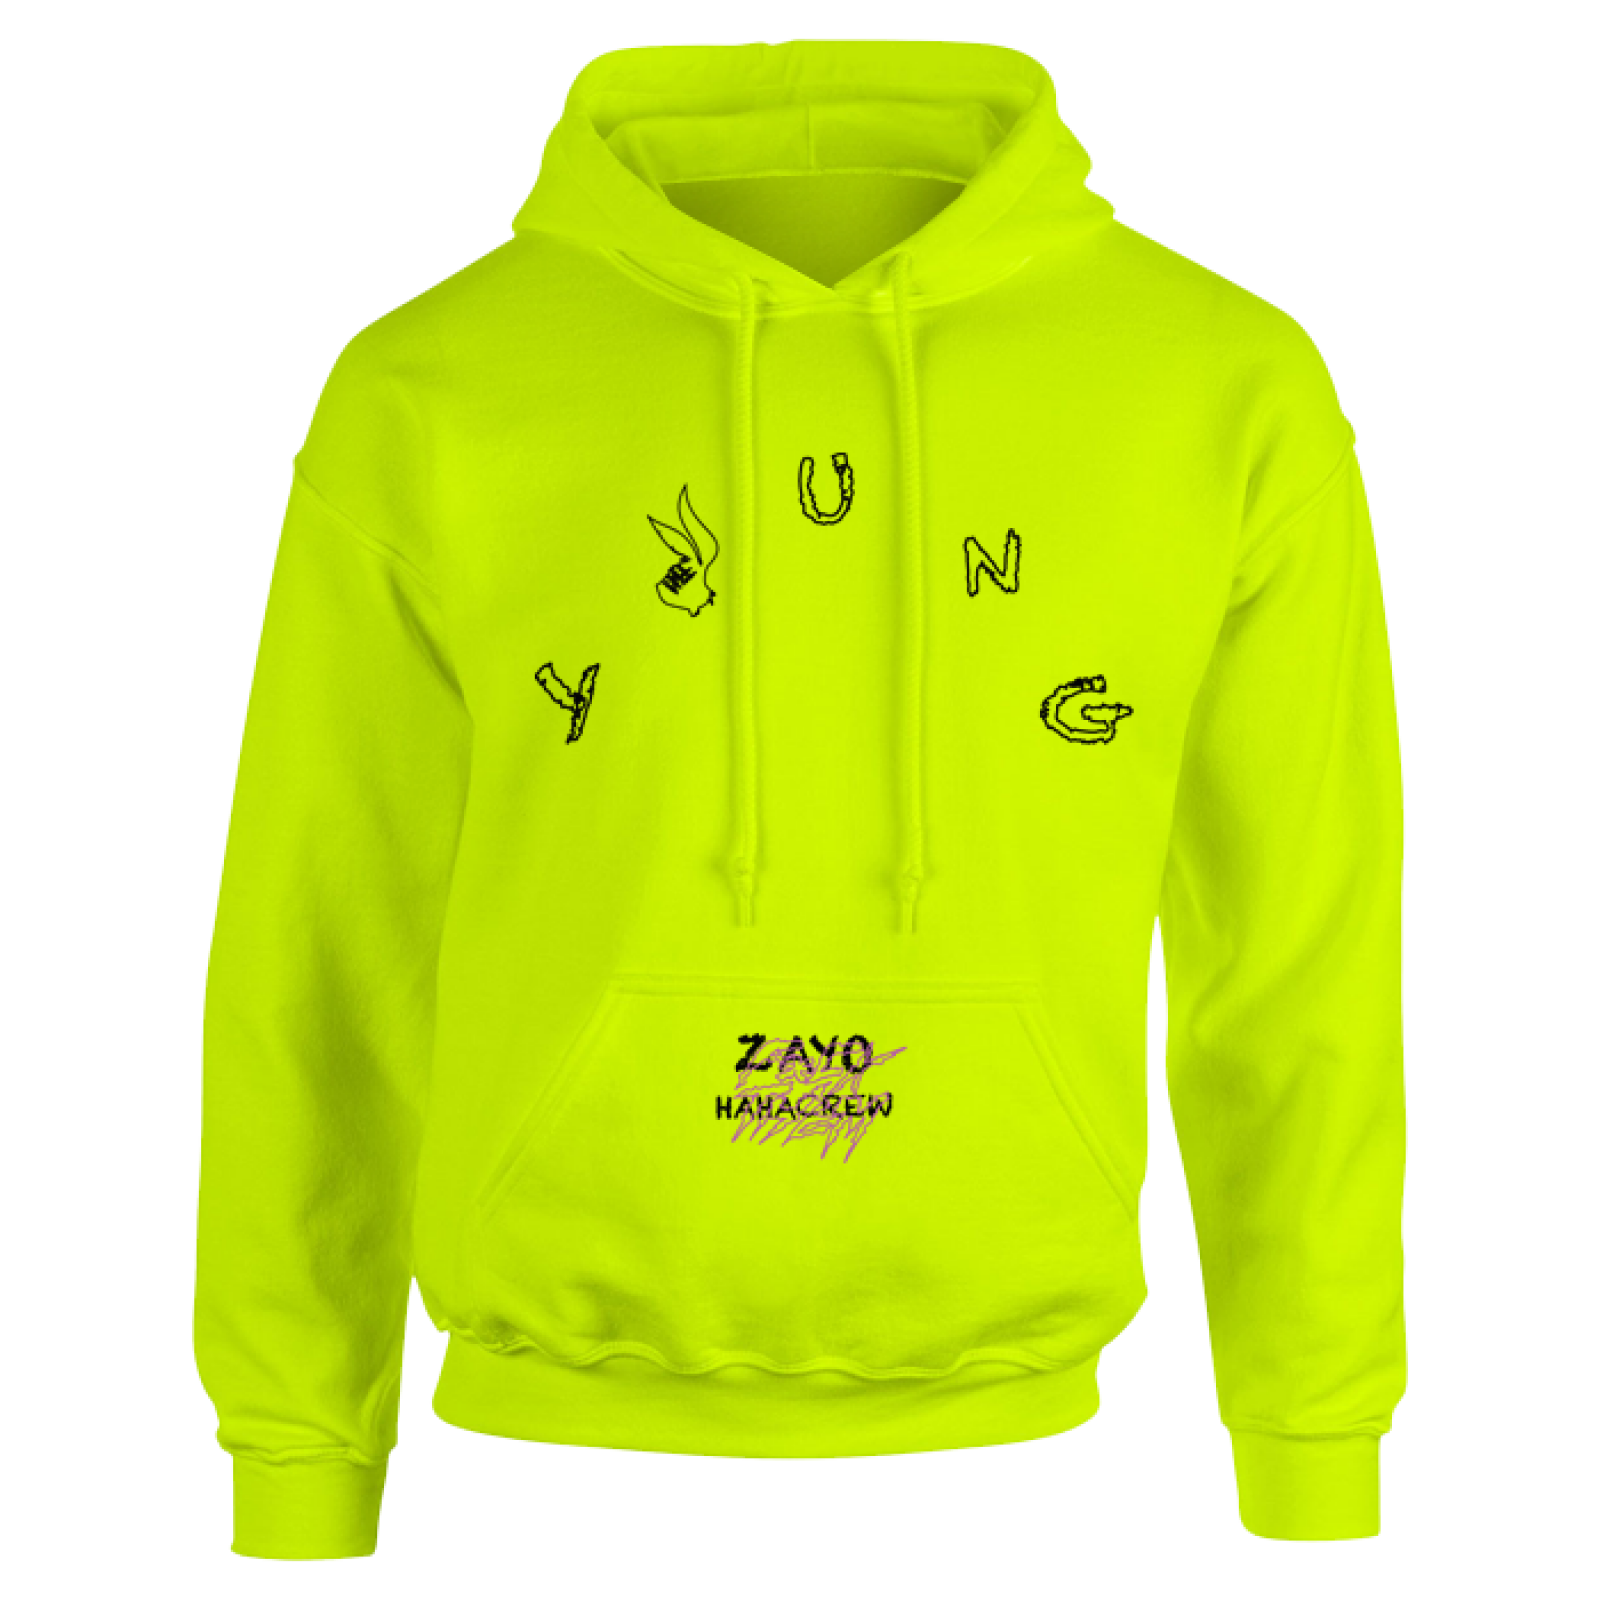 Zayo - Young, neon